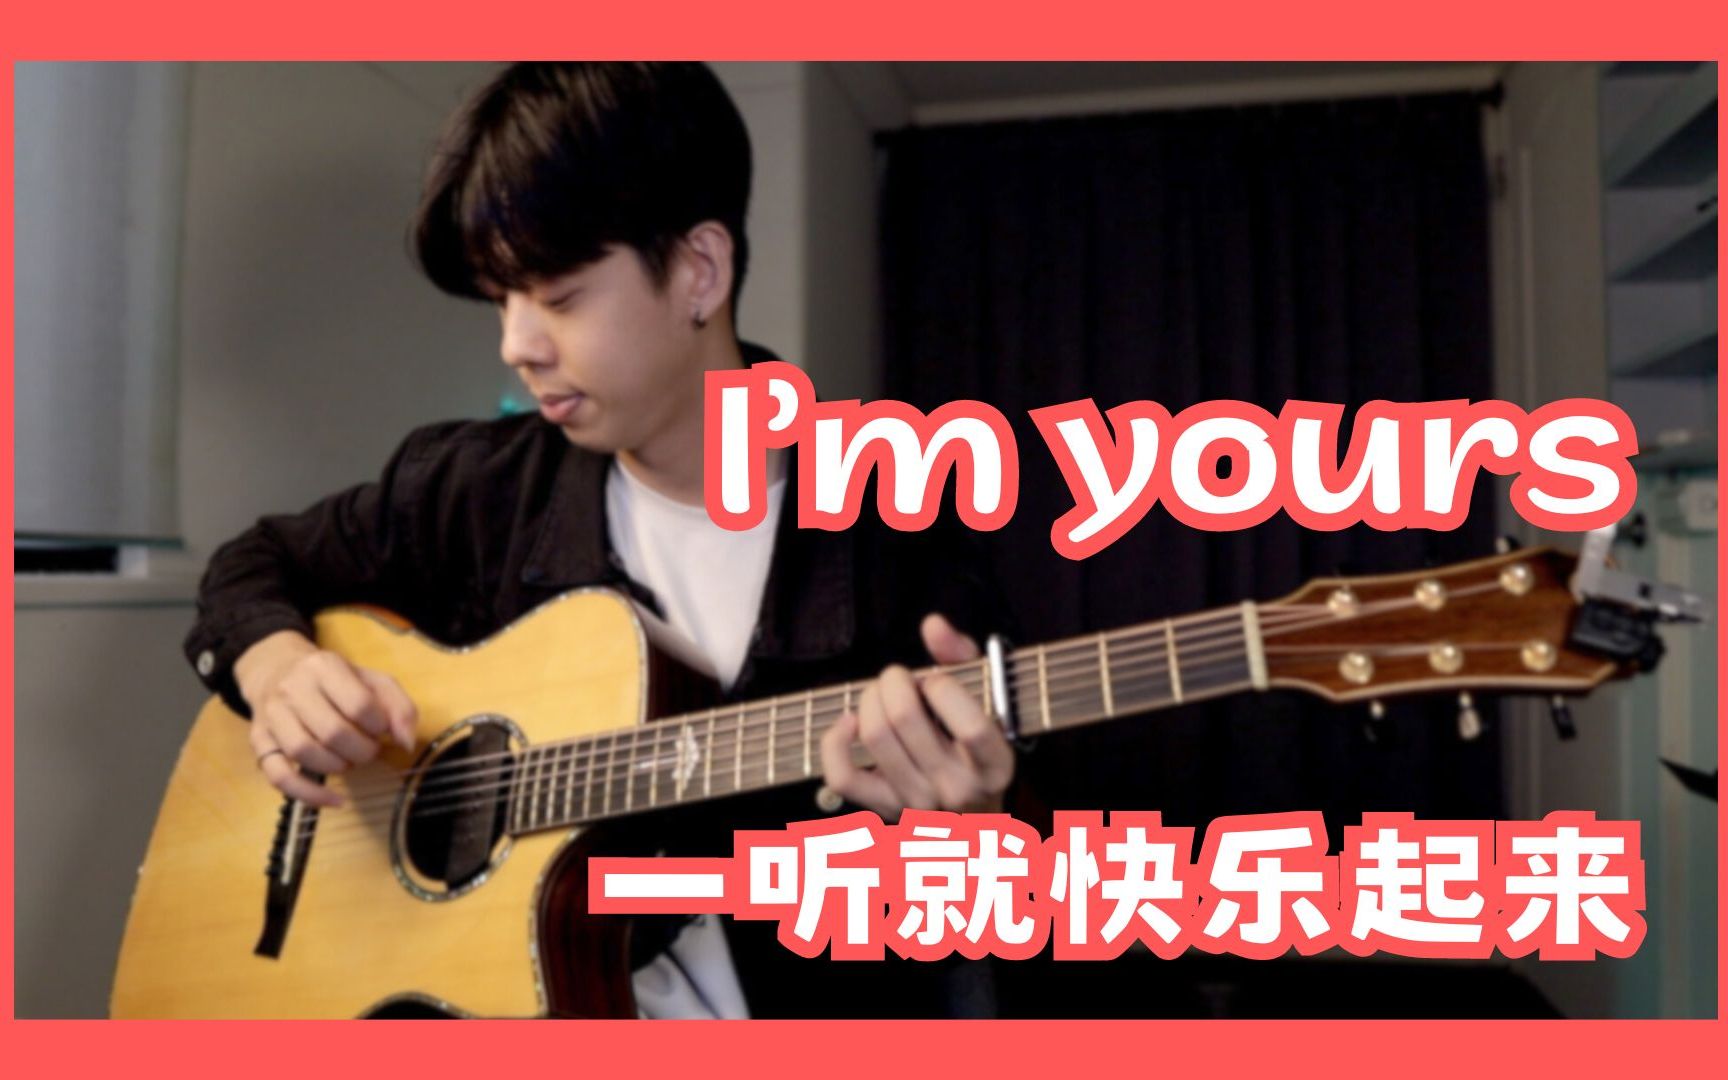 I'm Yours吉他视频-封面